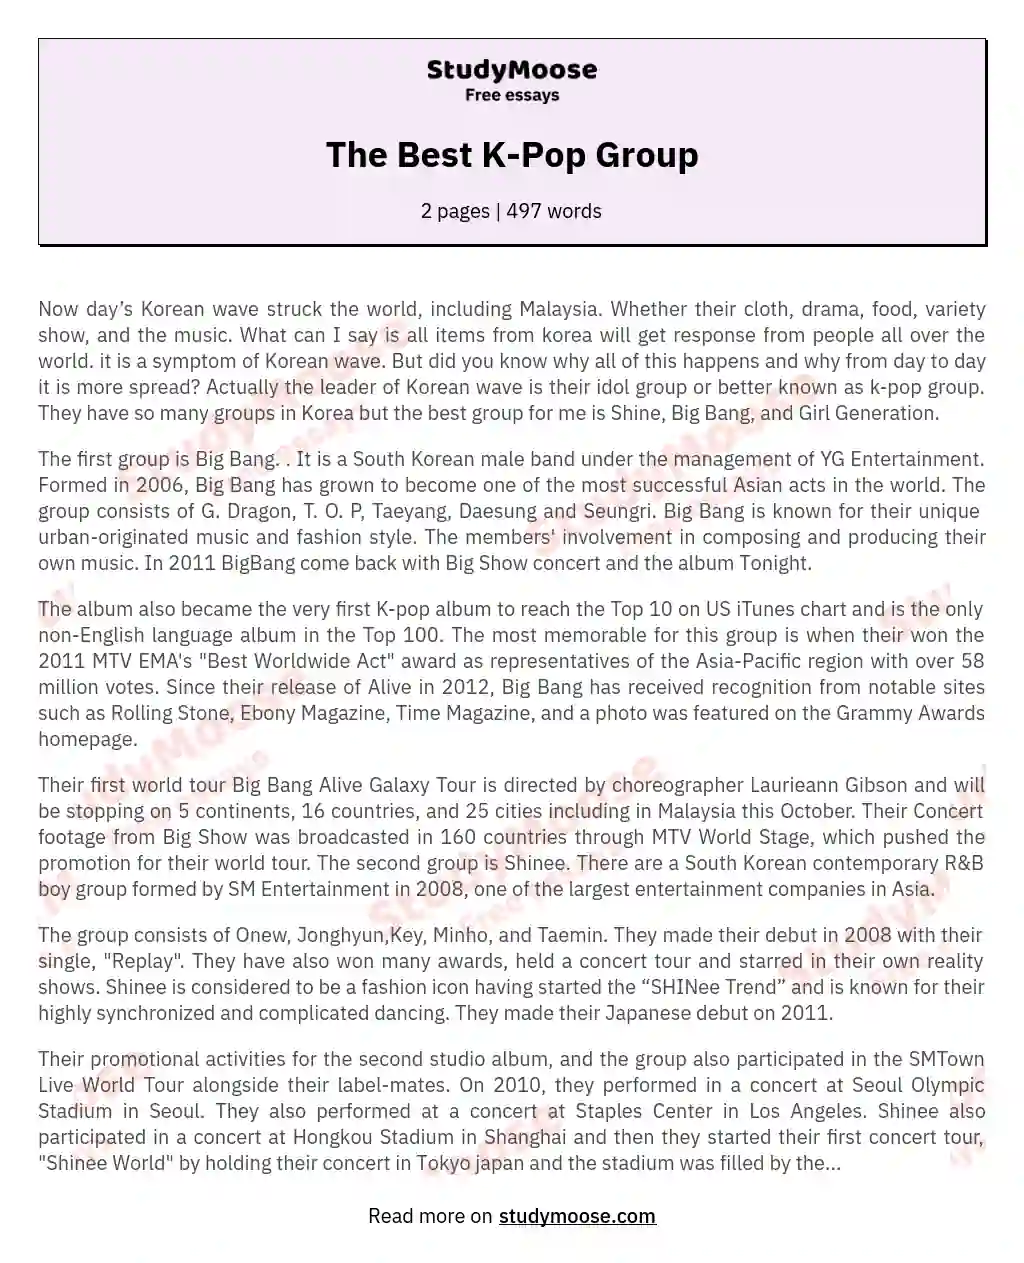 The Best K-Pop Group essay